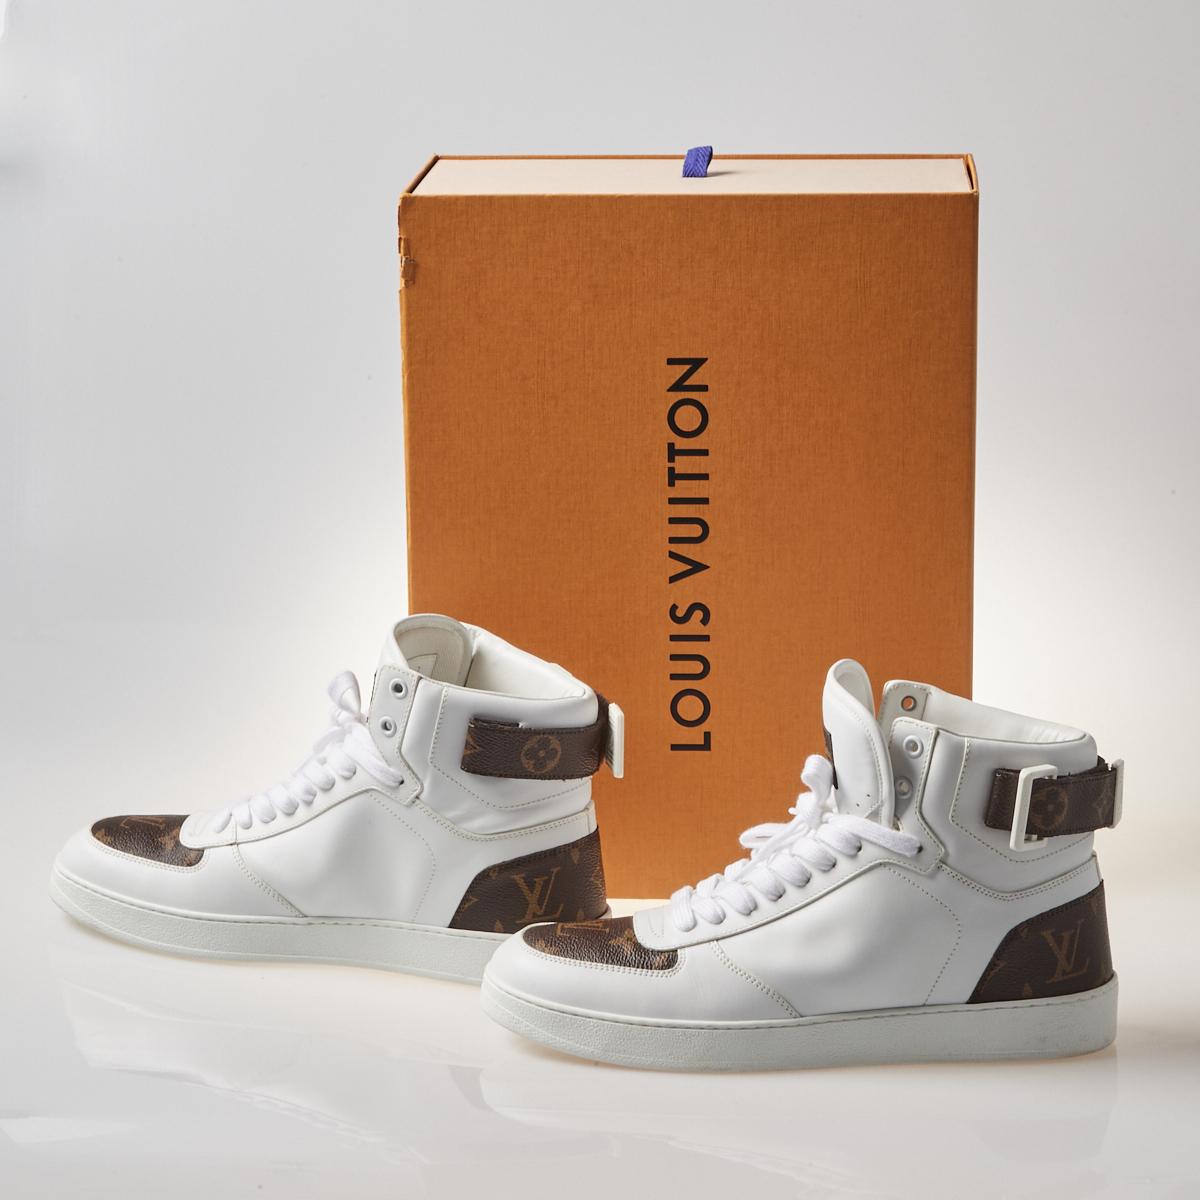 Louis Vuitton Basketball Shoes